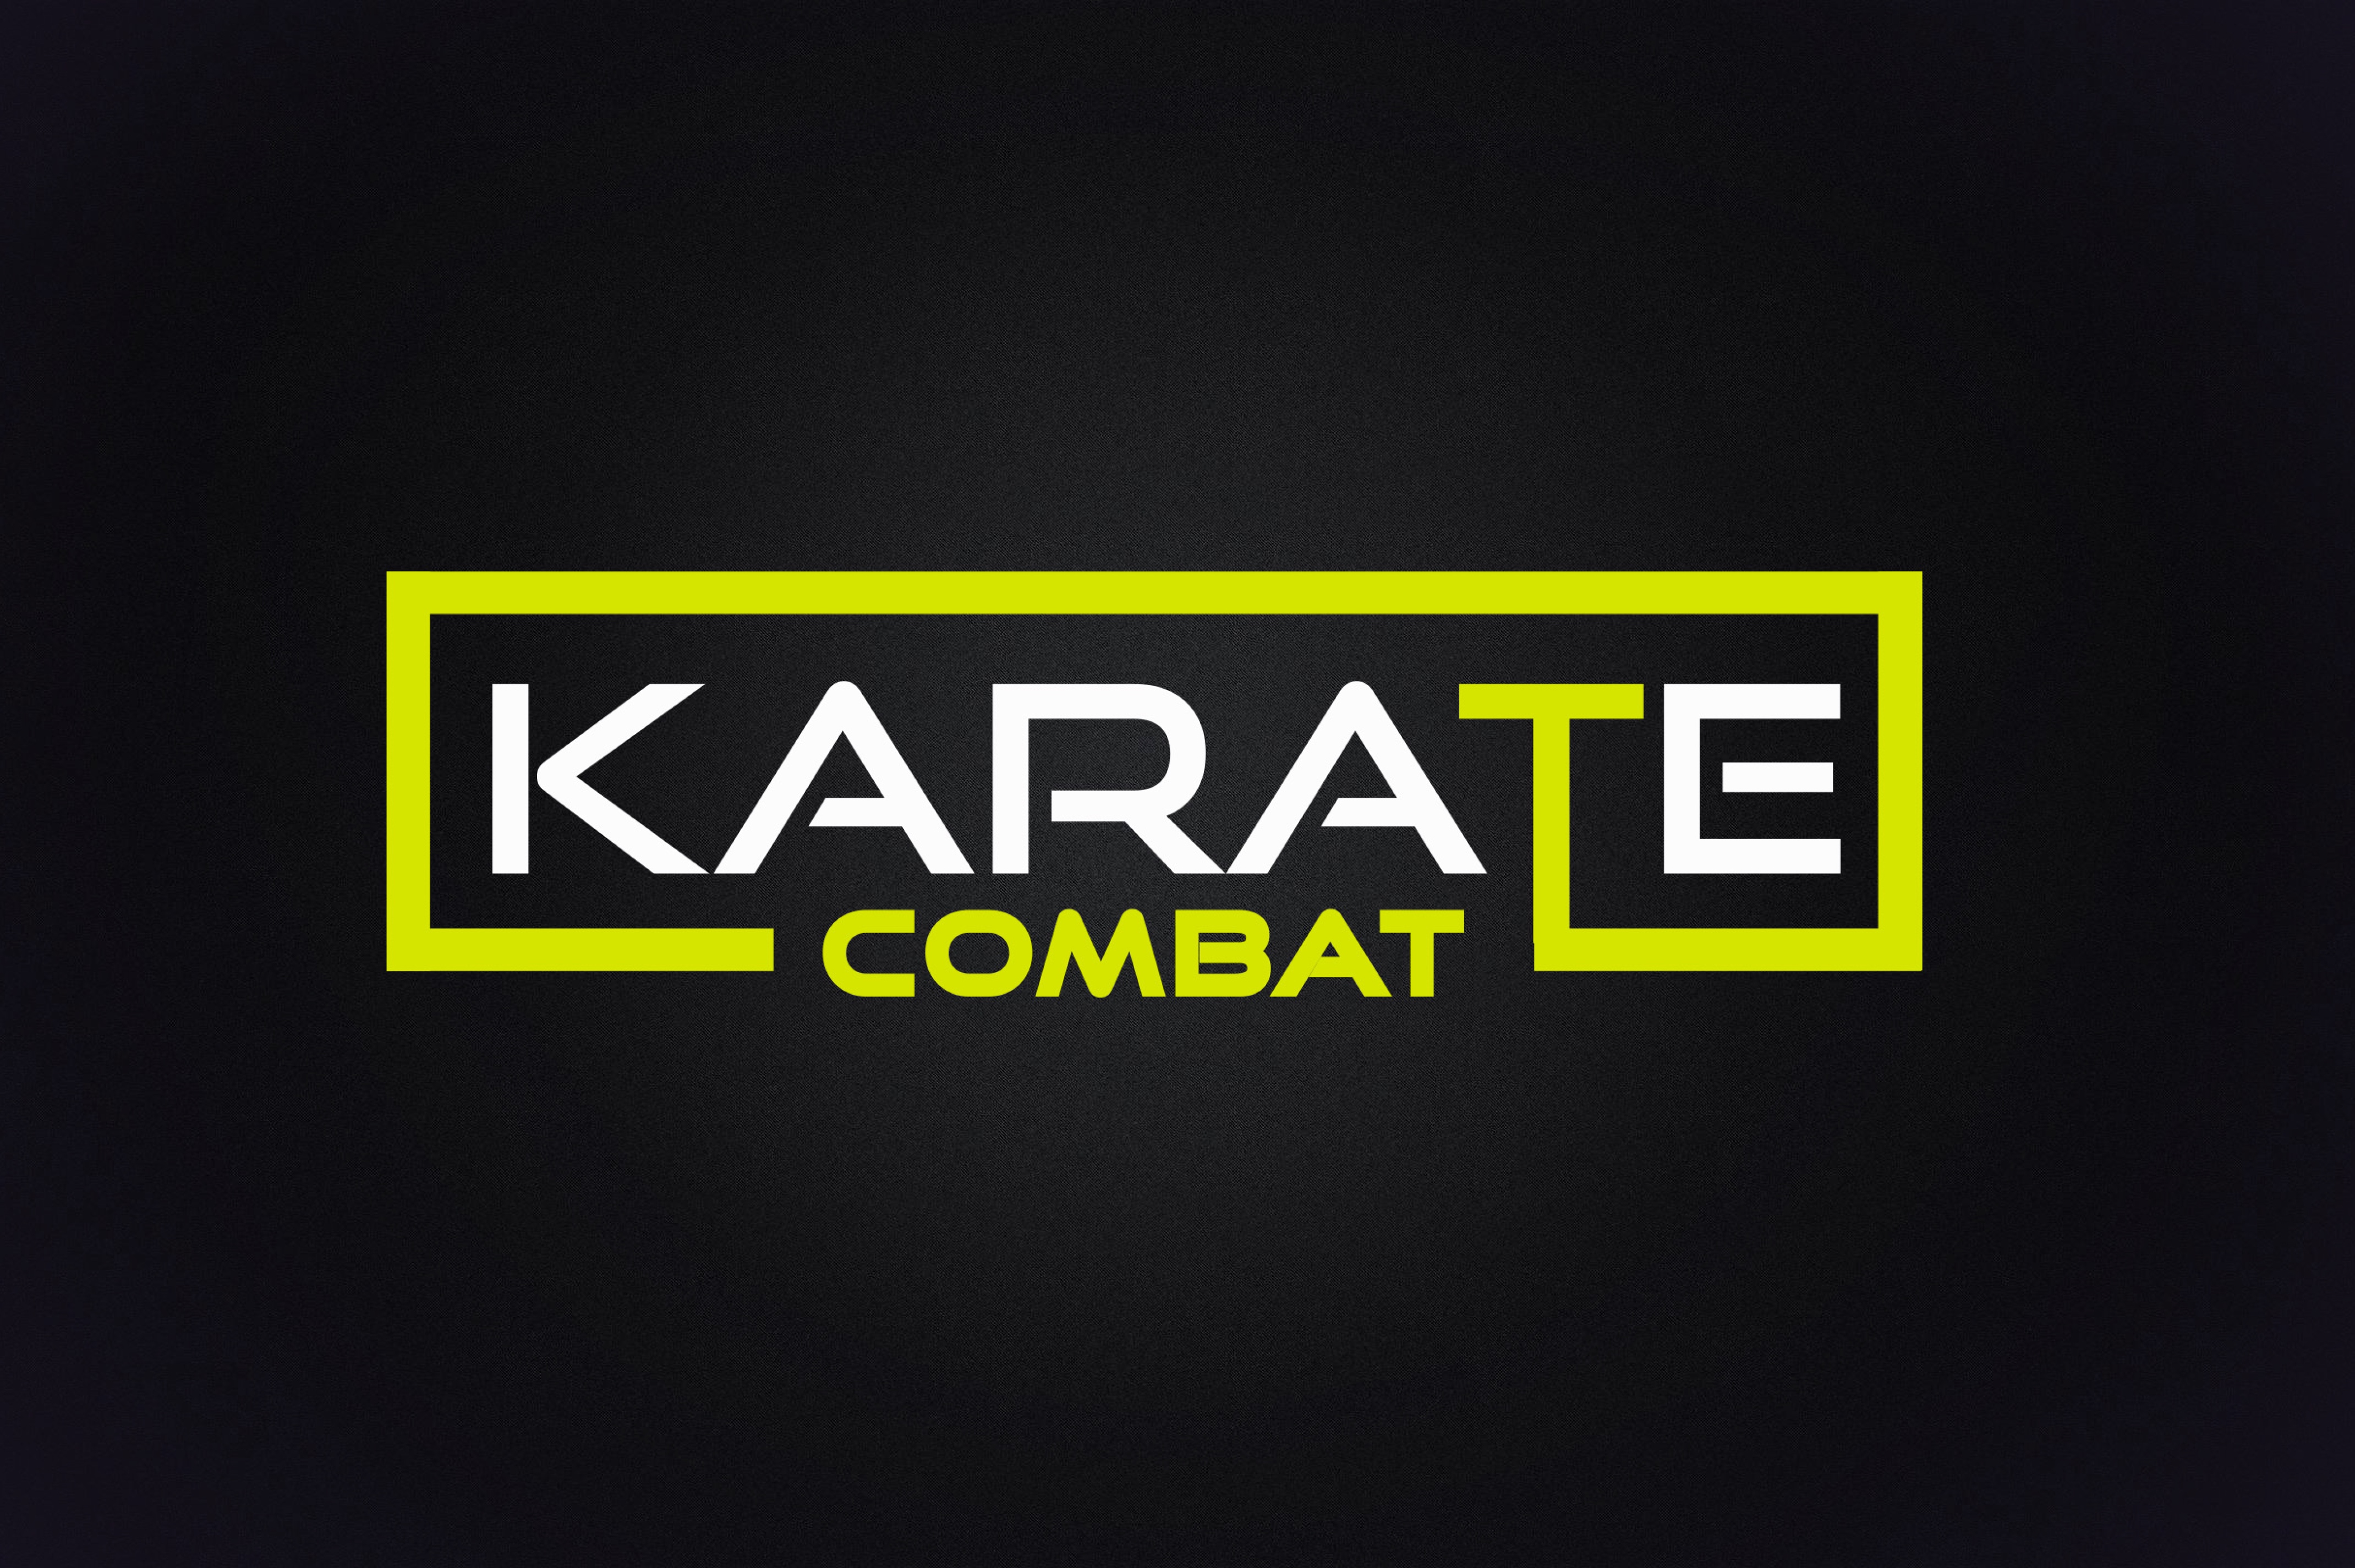 Karate Combat logo